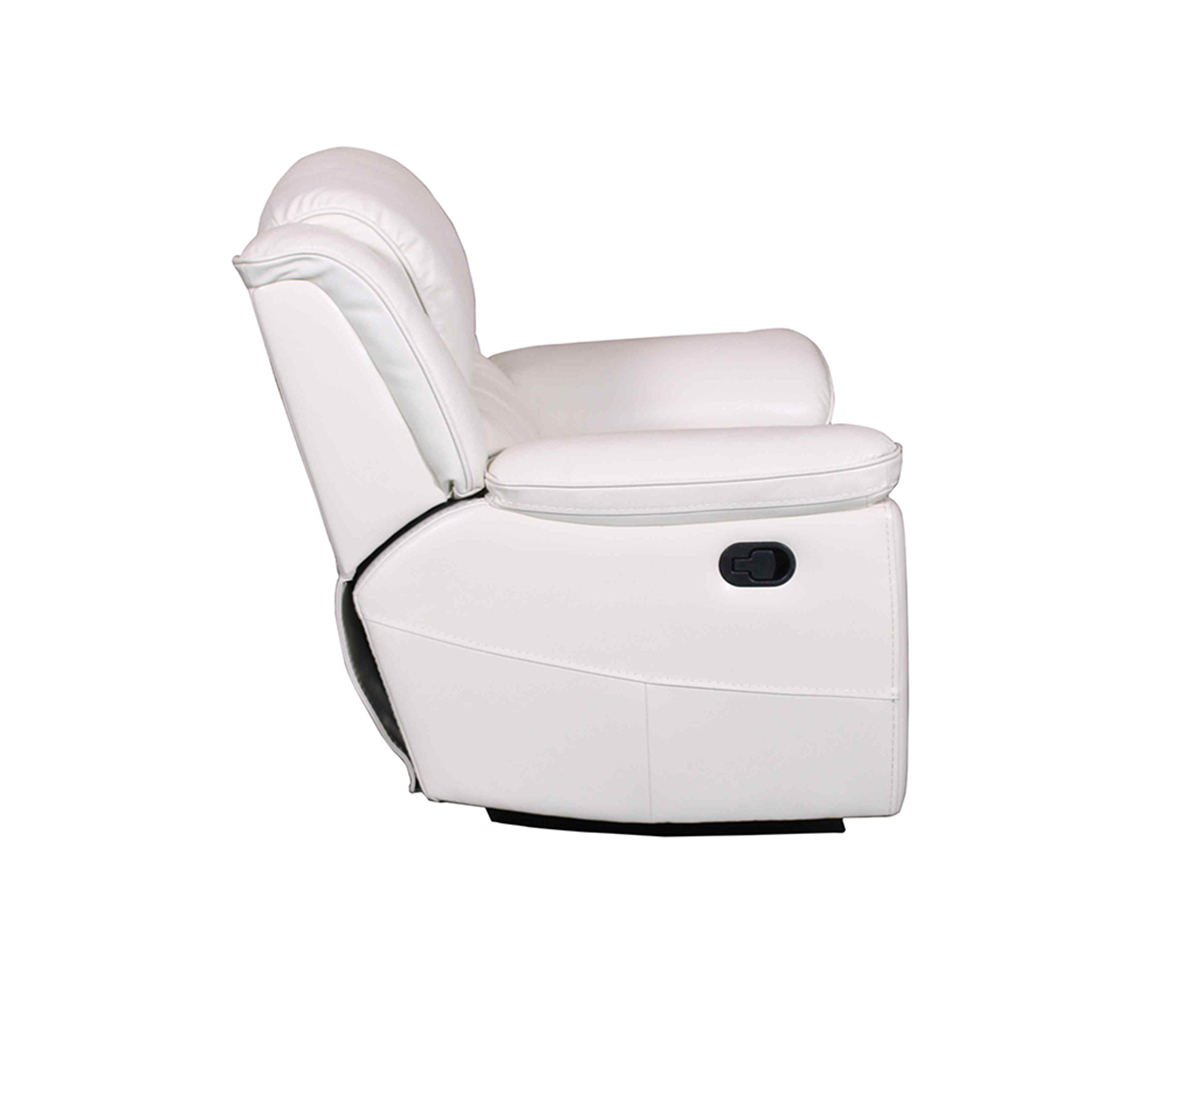 Barcalounger Laguna Swivel Glider Recliner Chair - Cashmere White/Leather Match